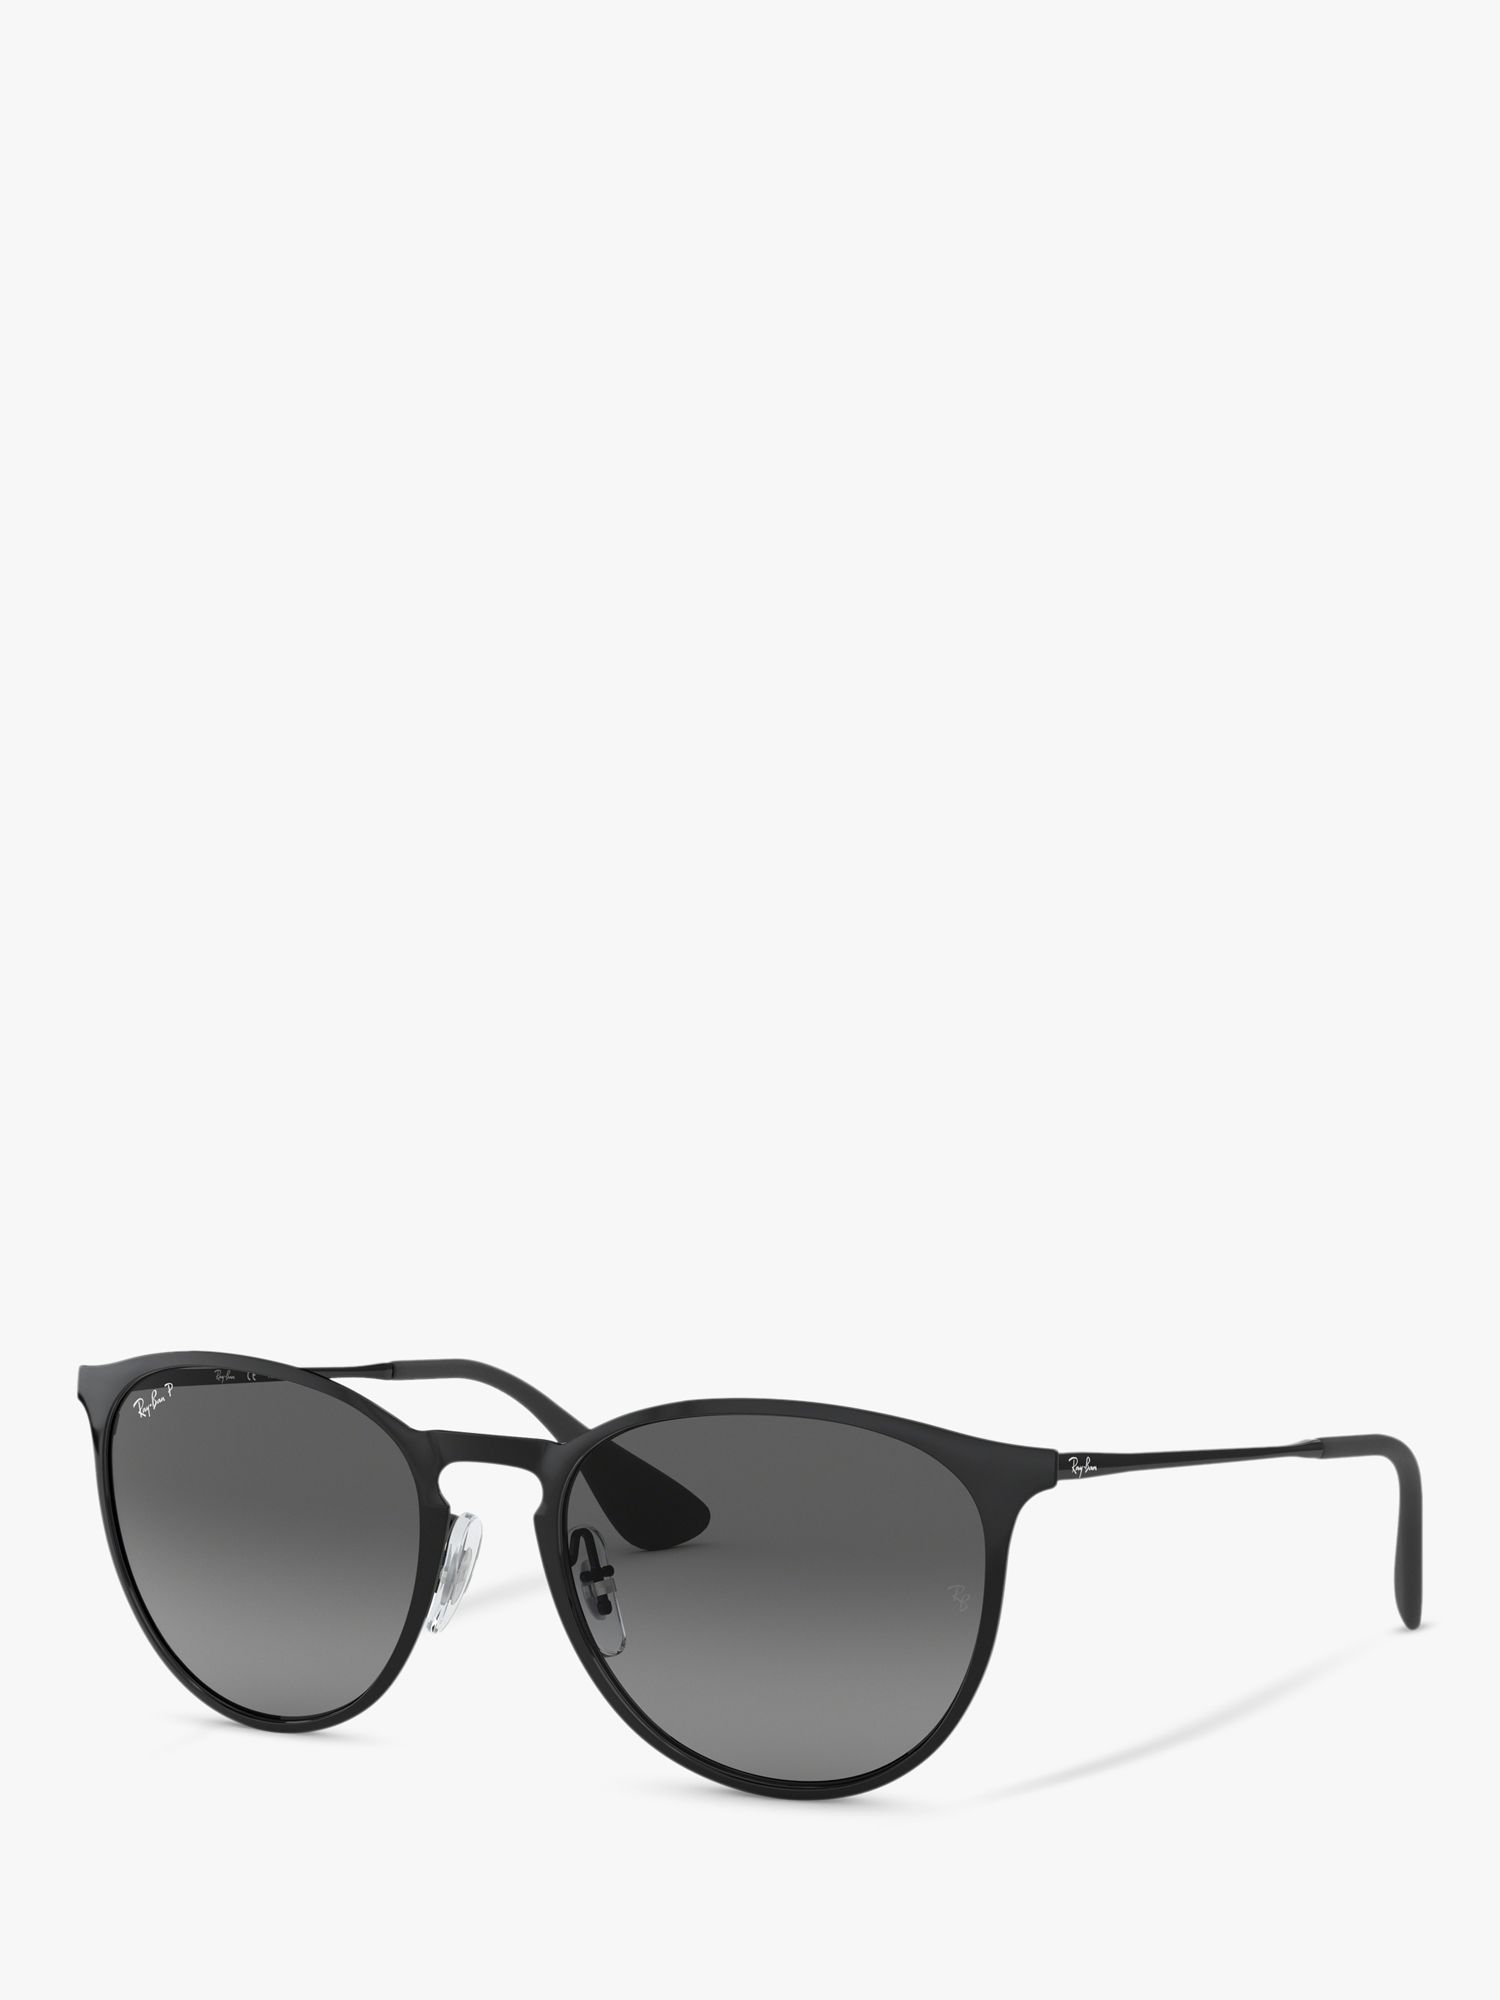 Ray-Ban RB3539 Women's Erika Polarised Oval Sunglasses, Black/Grey Gradient  at John Lewis & Partners